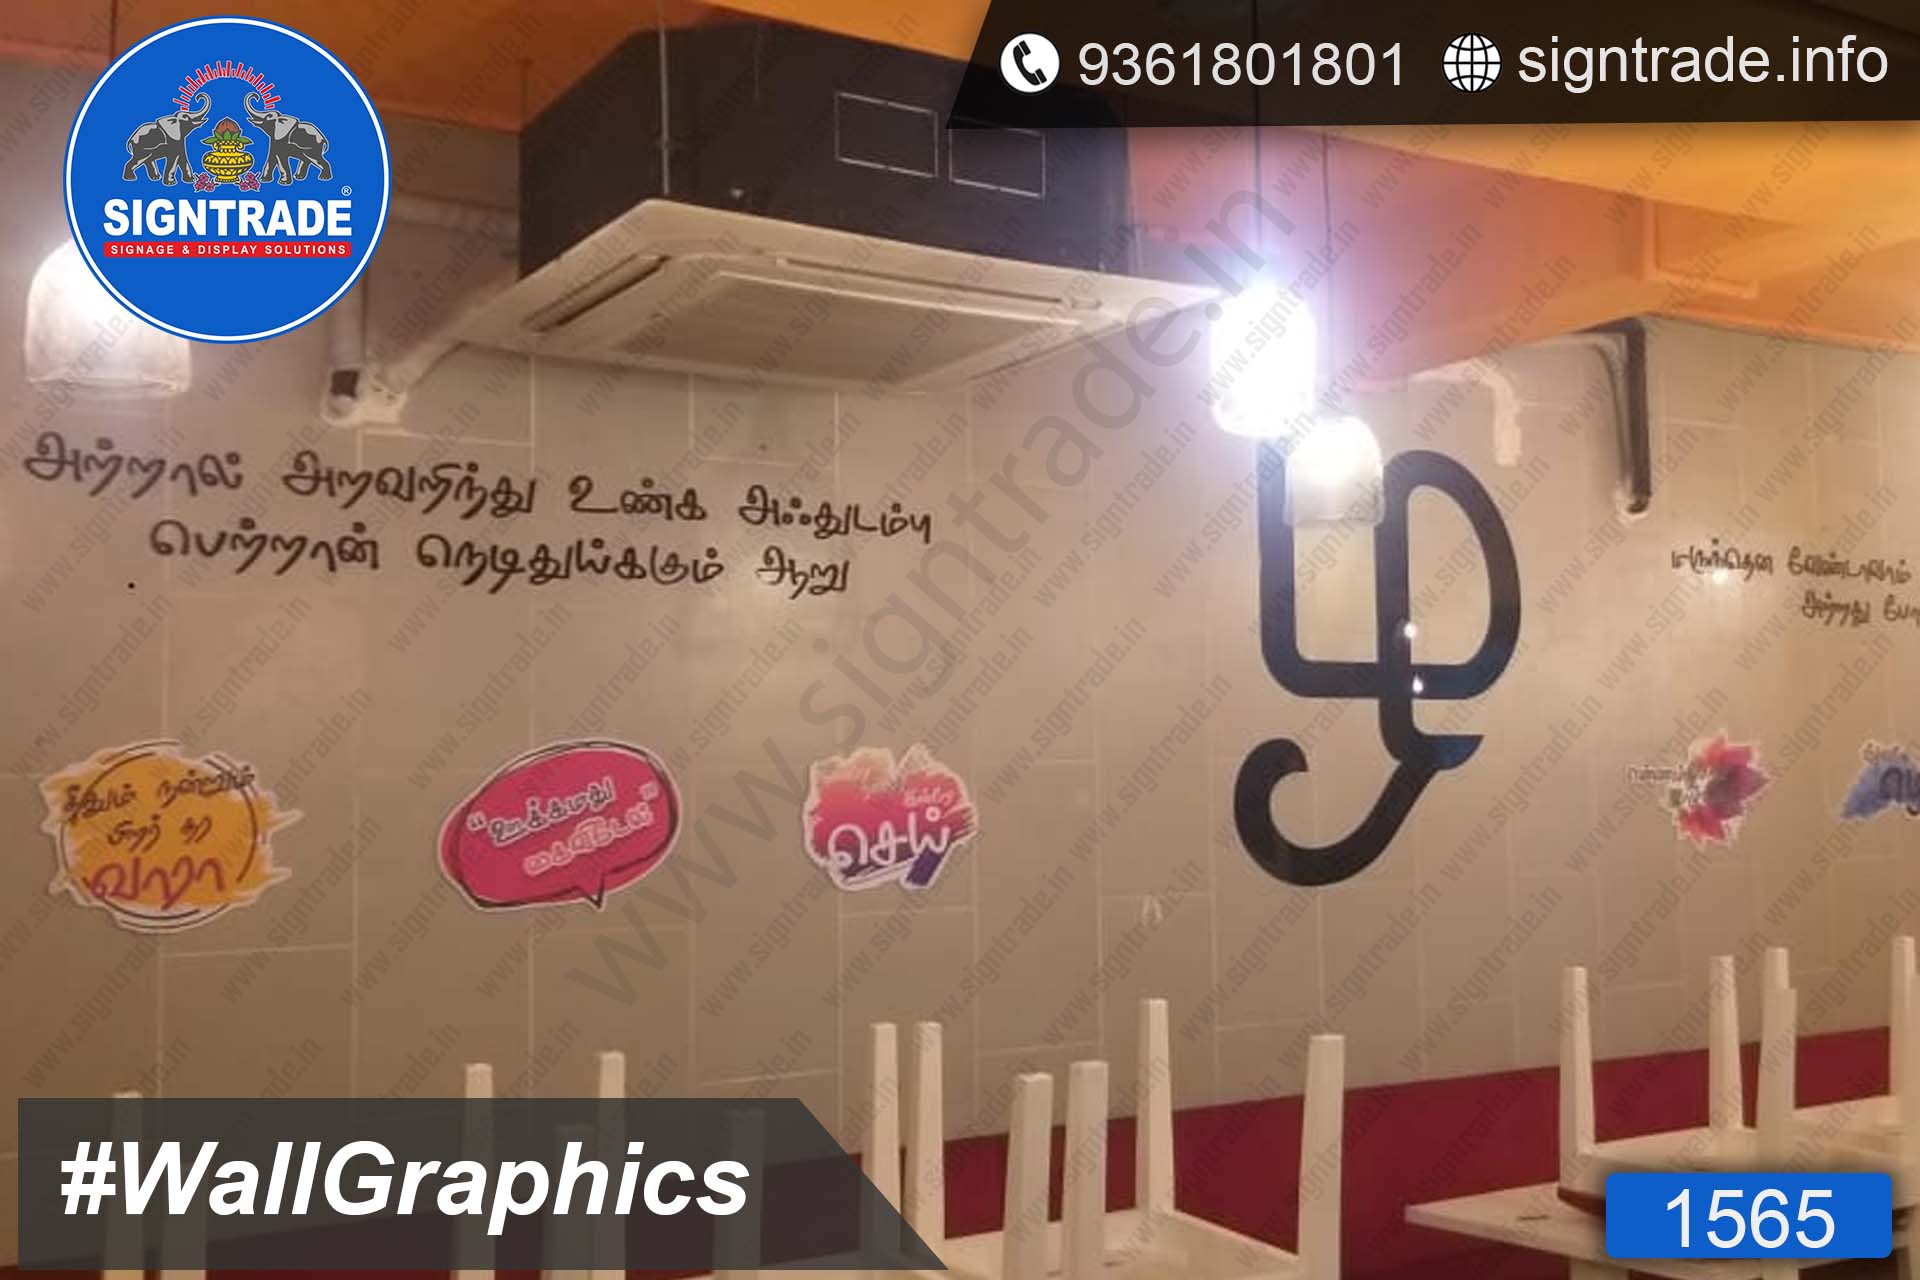 Aruvi Restaurant, Chennai - SIGNTRADE - Wall Graphics, Vinyl Graphics, Vinyl Printing Service in Chennai